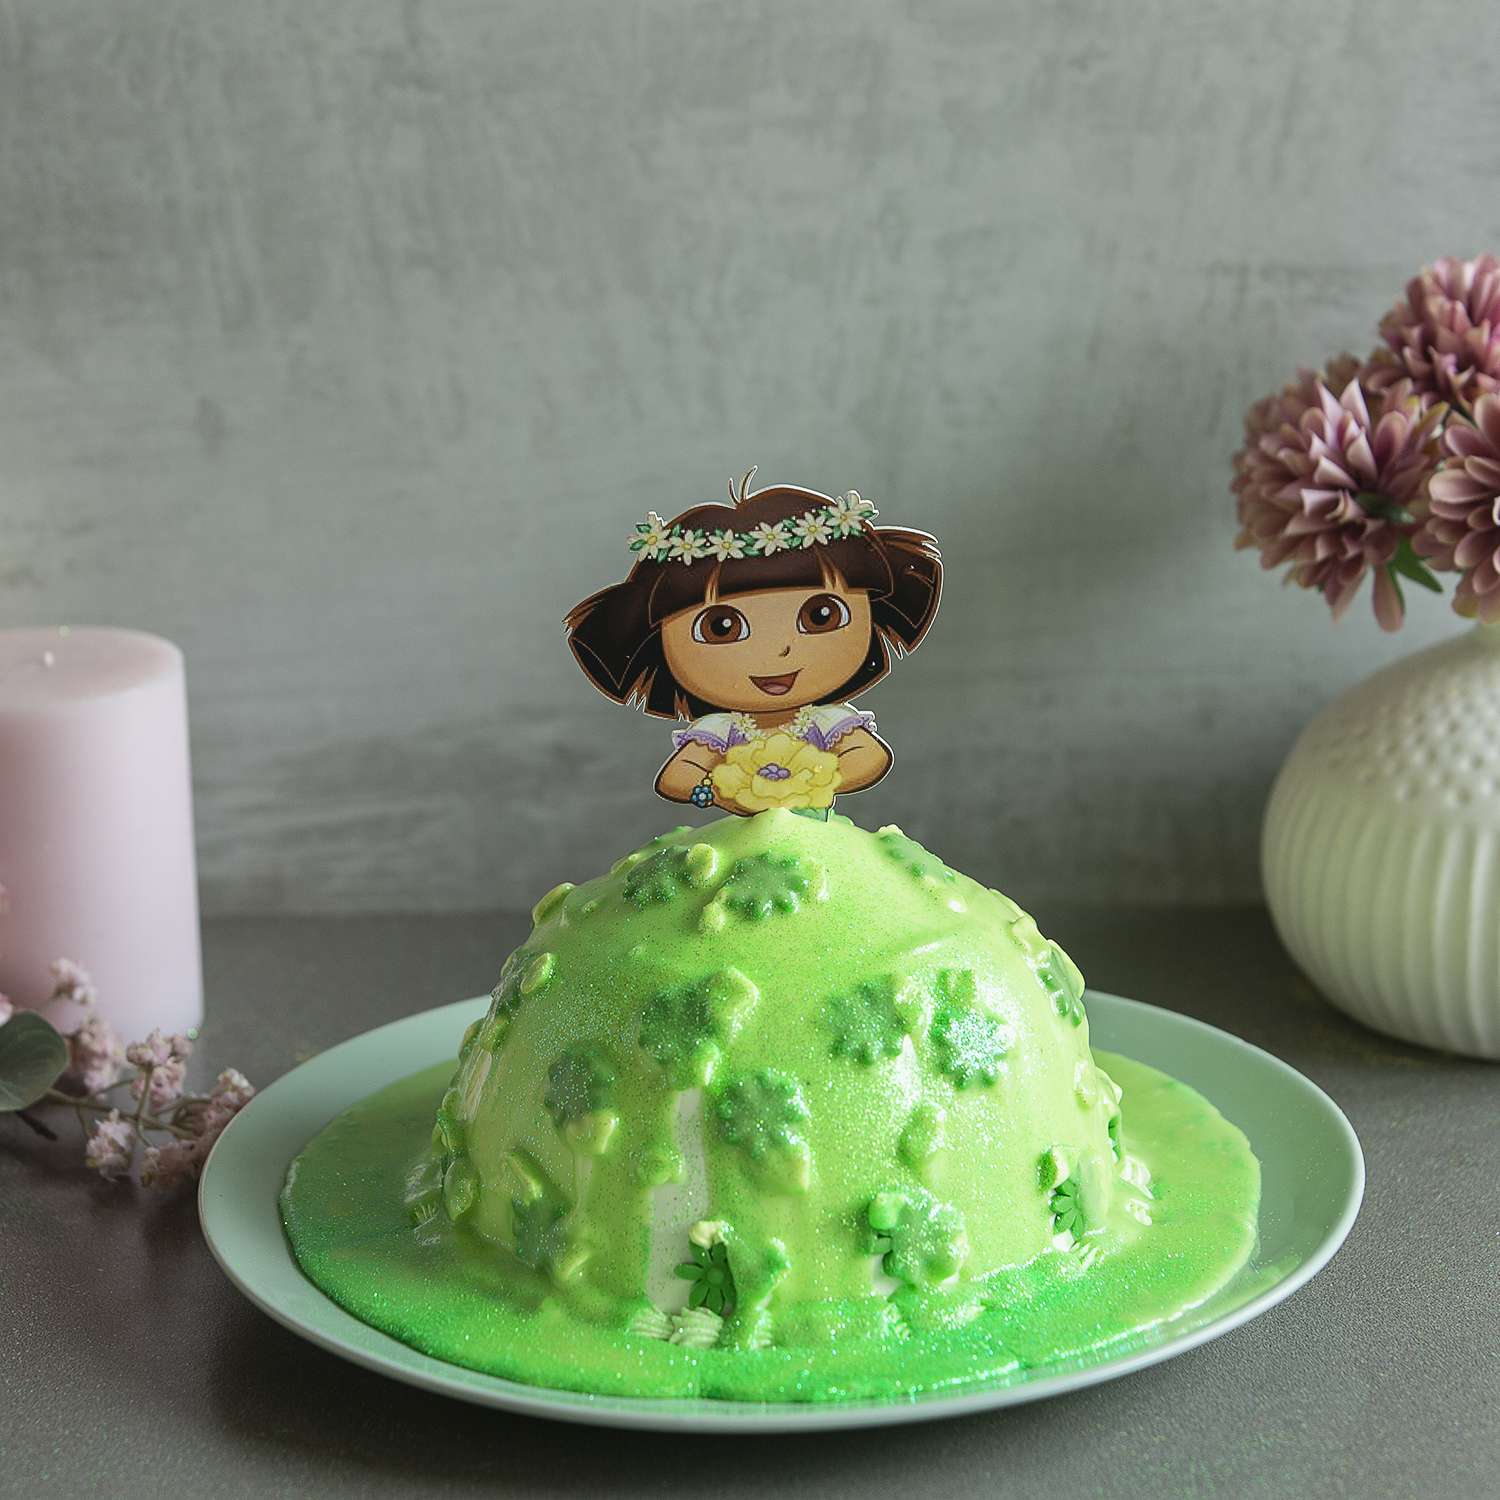 Little Dora Cake - Decorated Cake by Mardie Makes Cakes - CakesDecor